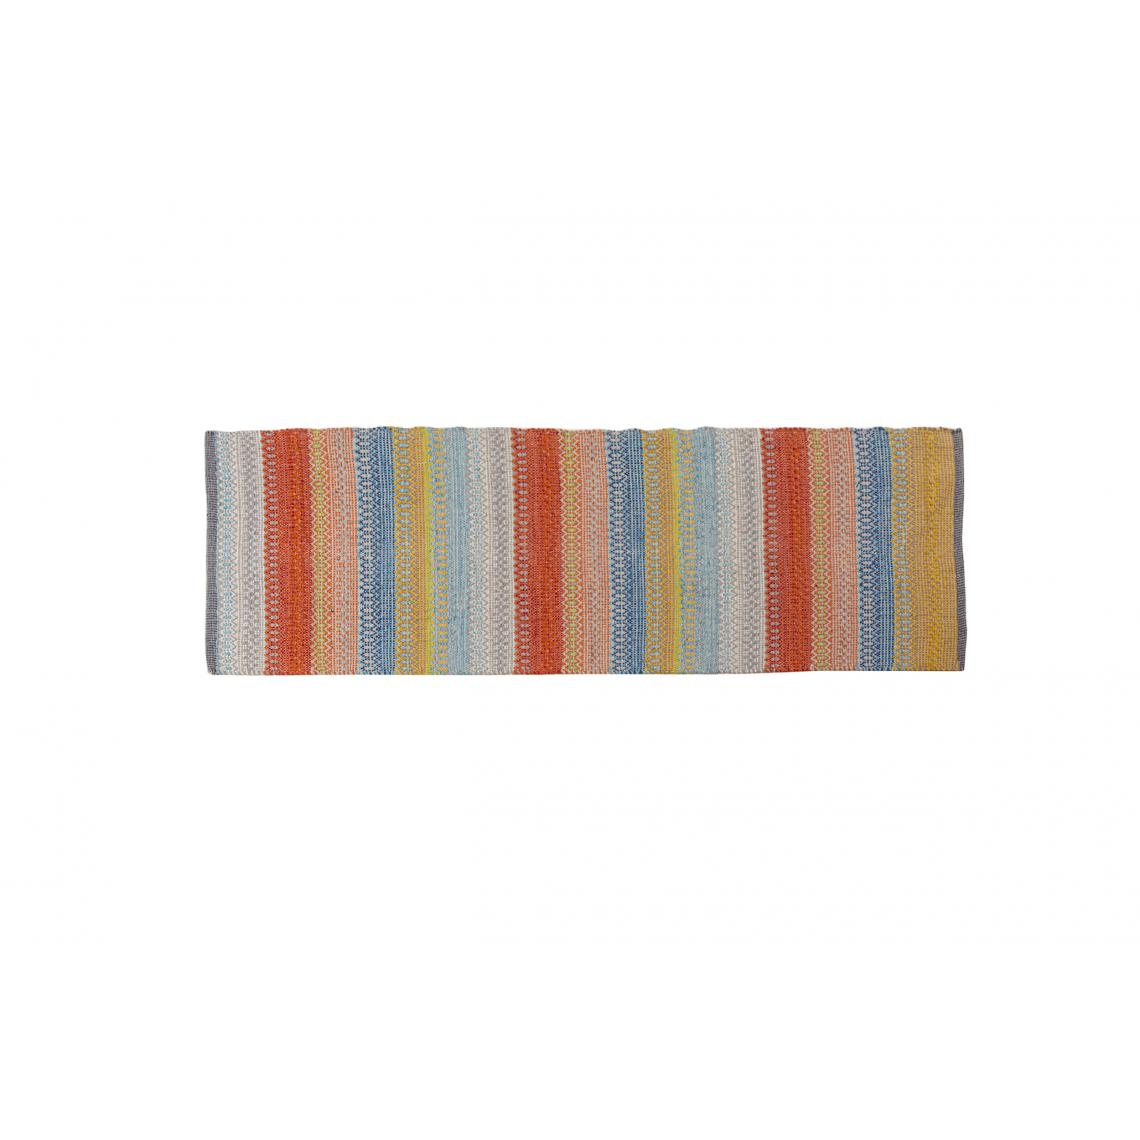 Alter - Tapis moderne Cleveland, style kilim, 100% coton, multicolore, 240x60cm - Tapis